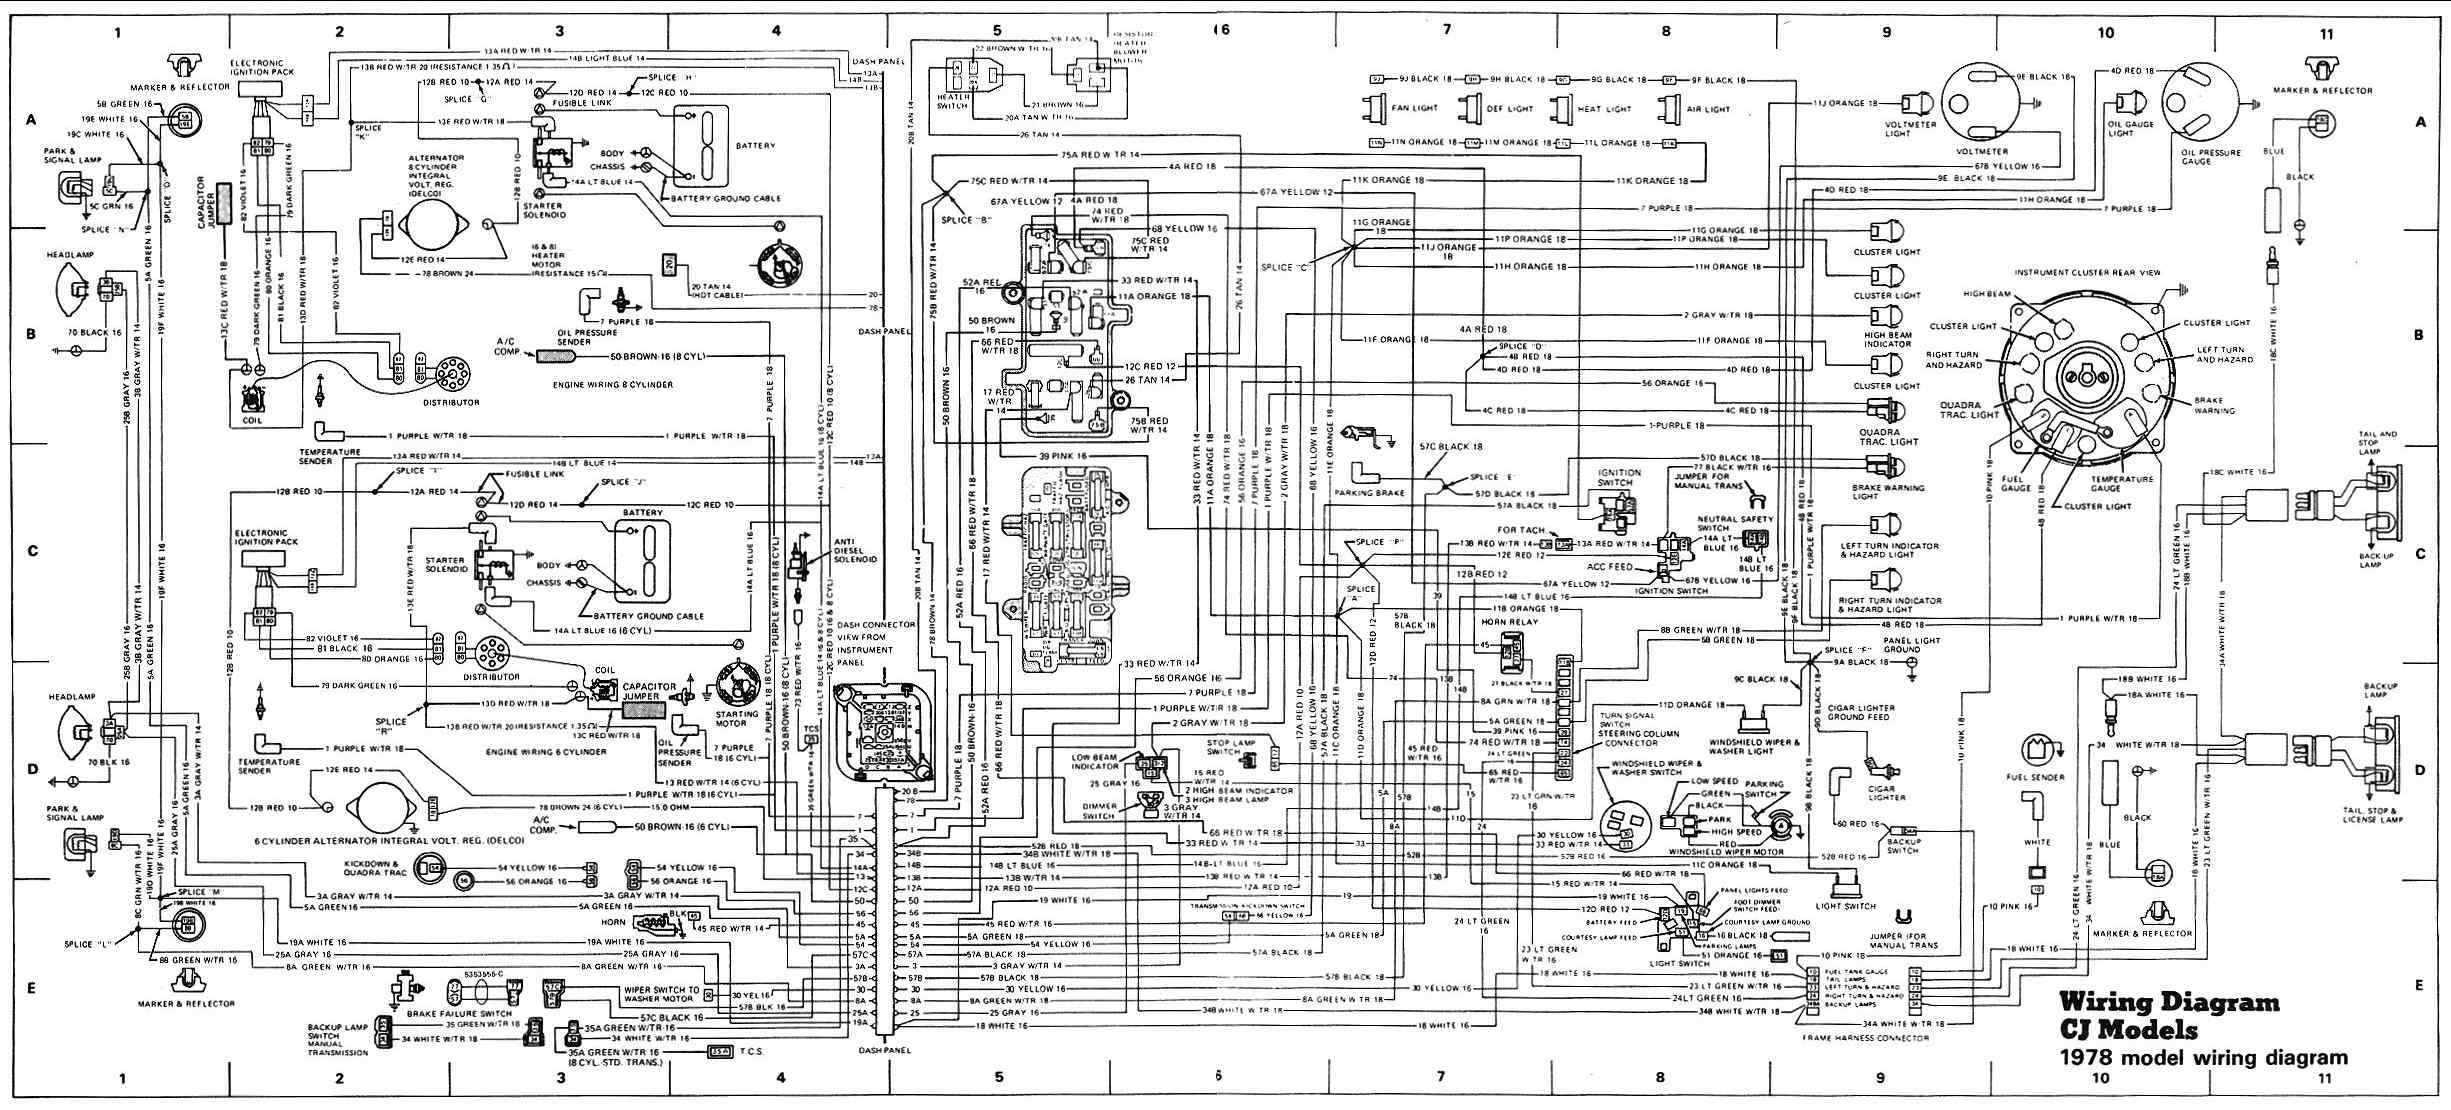 JEEP - Car PDF Manual, Wiring Diagram & Fault Codes DTC  1978 Jeep J10 Wiring Diagram    CAR PDF Manuals & Fault Codes DTC